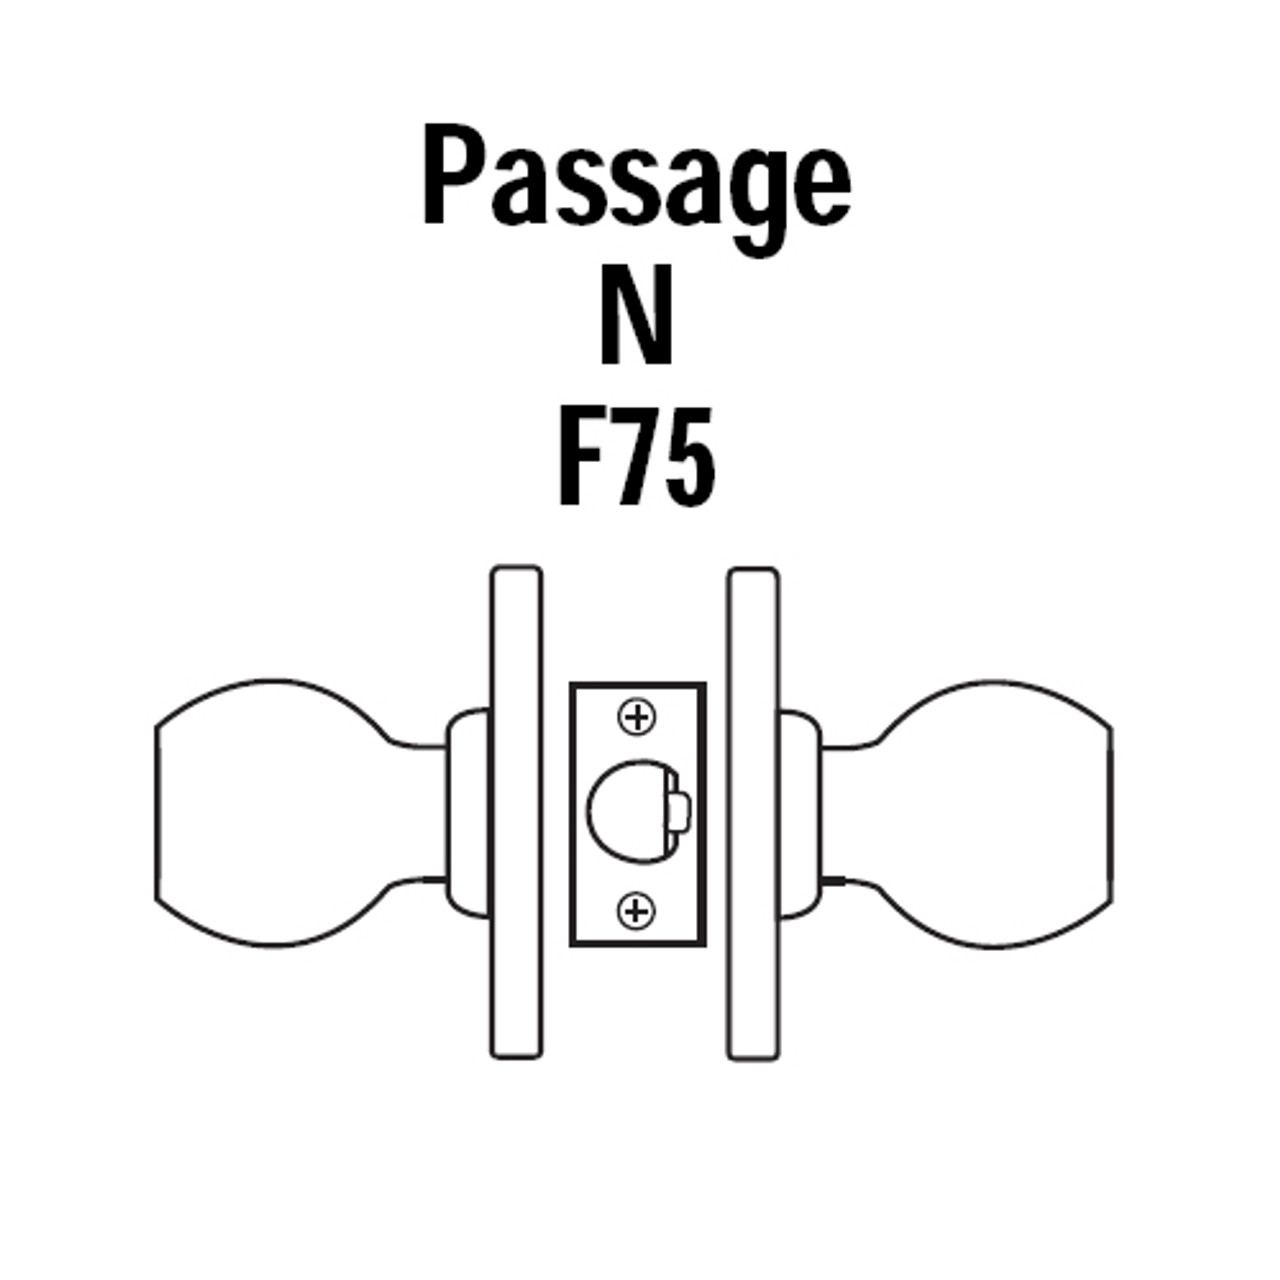 8K30N4CS3625 Best 8K Series Passage Heavy Duty Cylindrical Knob Locks with Round Style in Bright Chrome